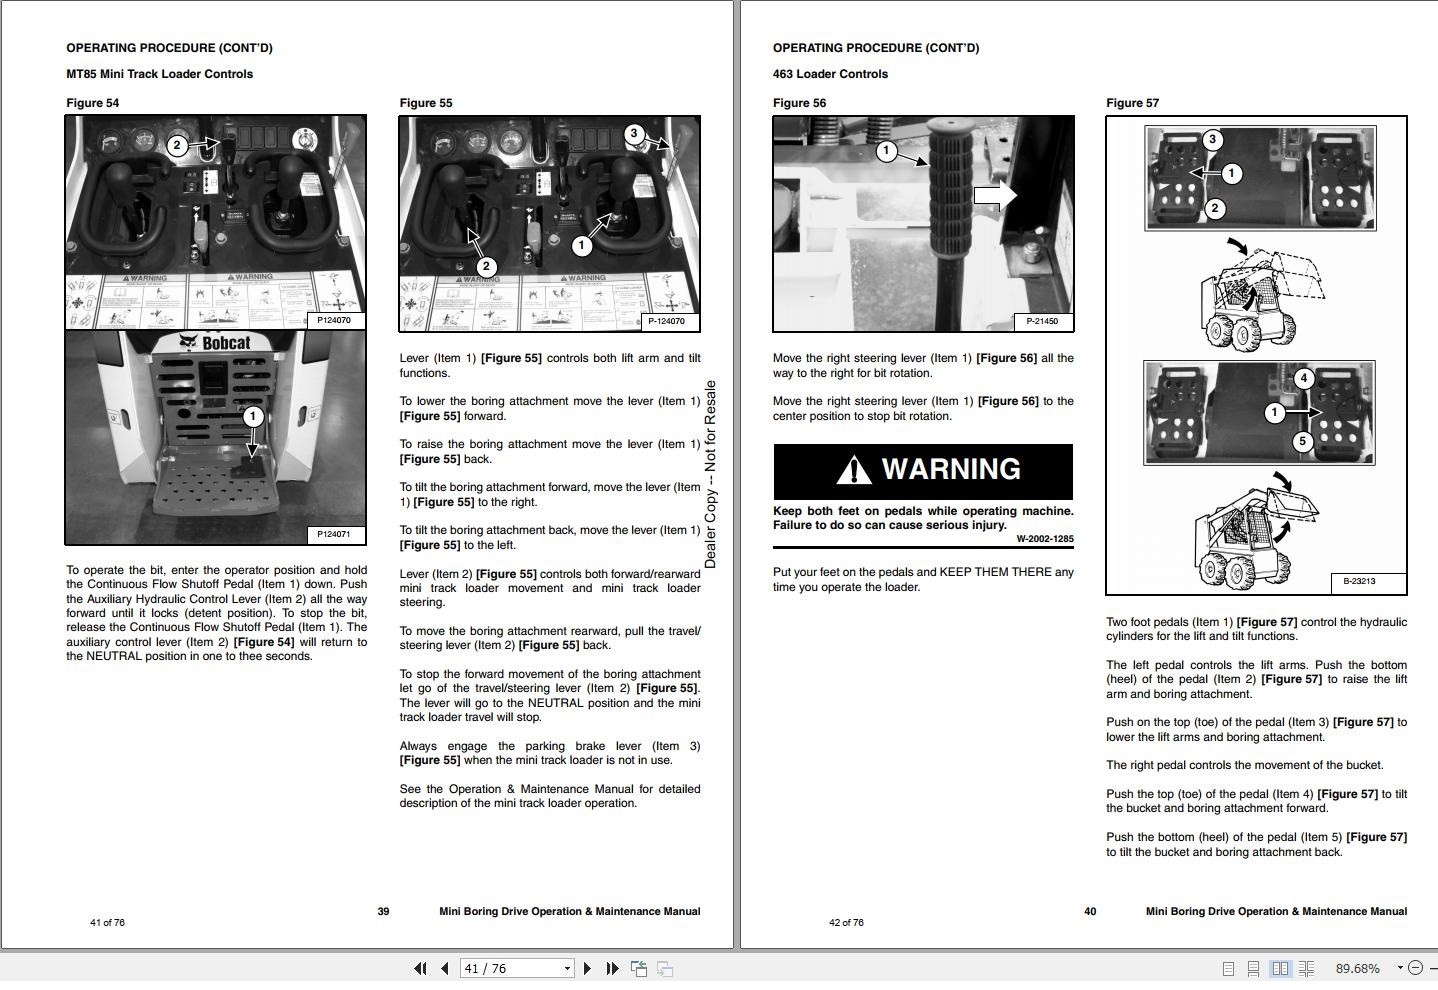 Bobcat Mini Boring Drive Operation and Maintenance Manual 6903826 07. ...